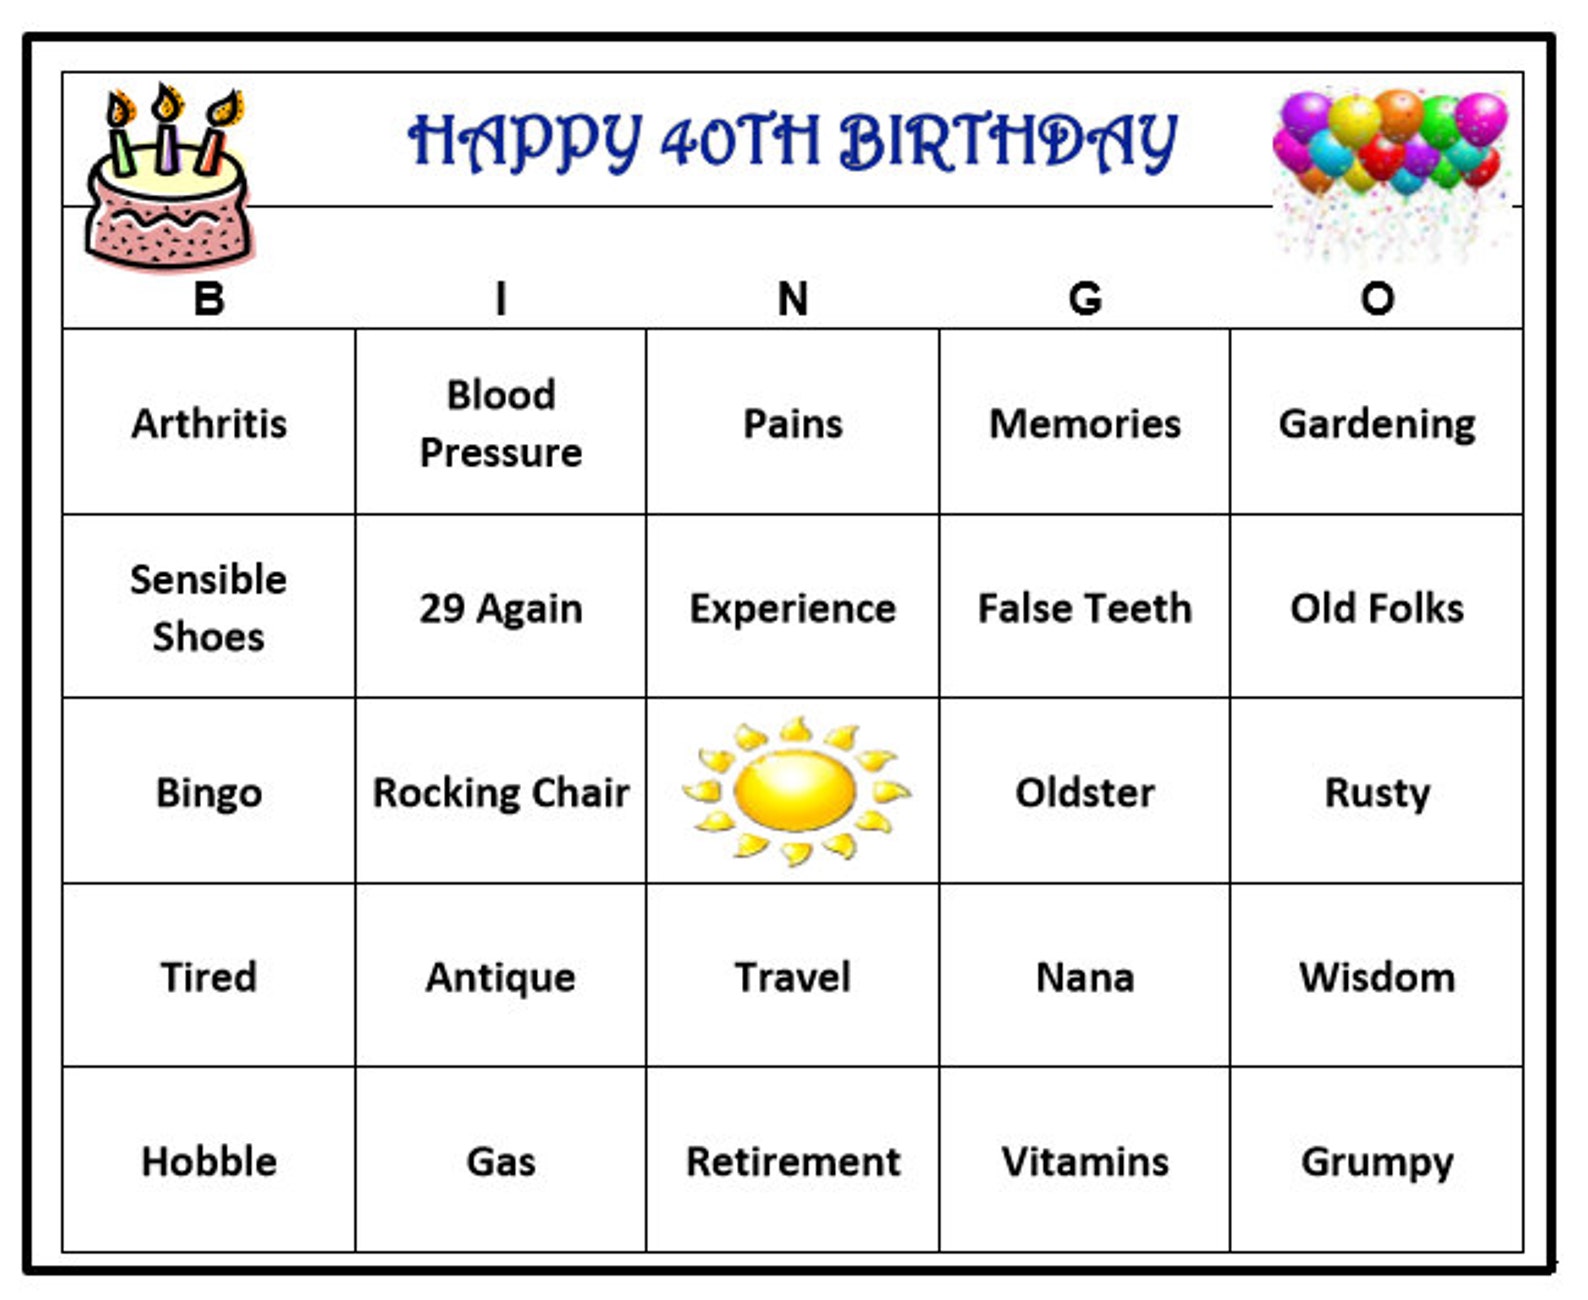 40th-birthday-party-bingo-game-60-cards-old-age-theme-bingo-etsy-uk